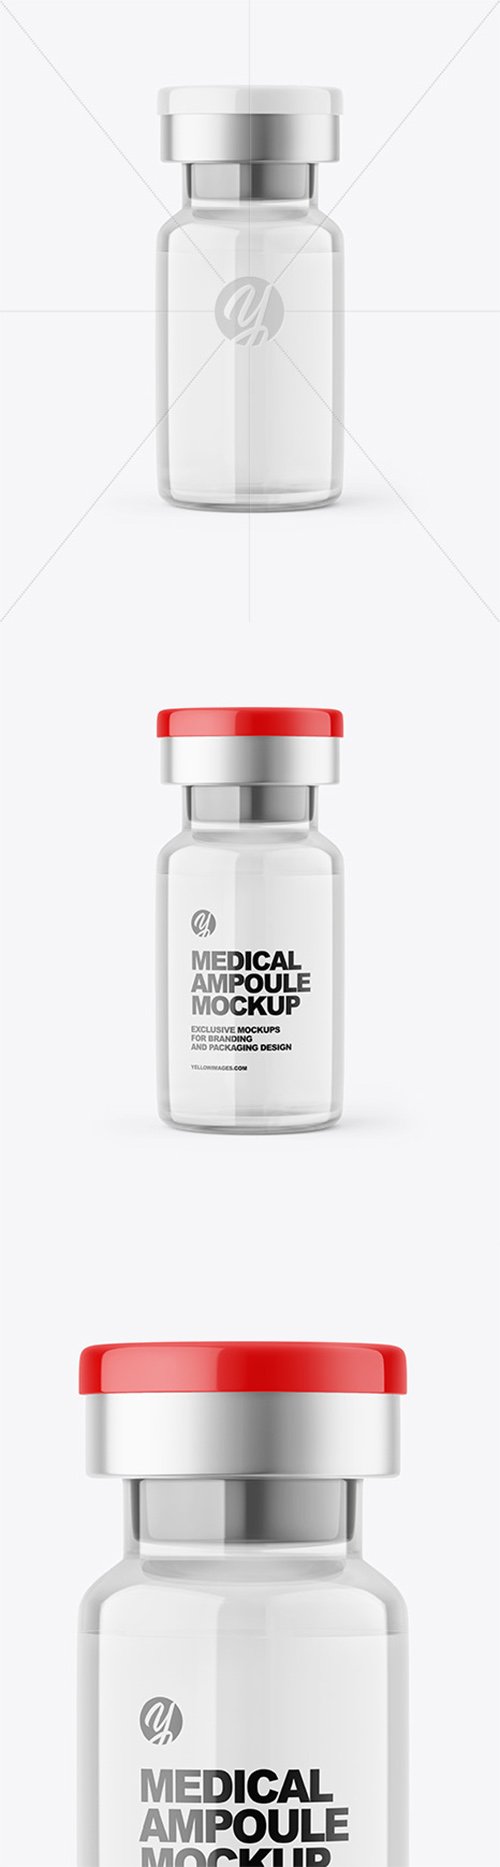 Medical Ampoule Mockup 80634 TIF